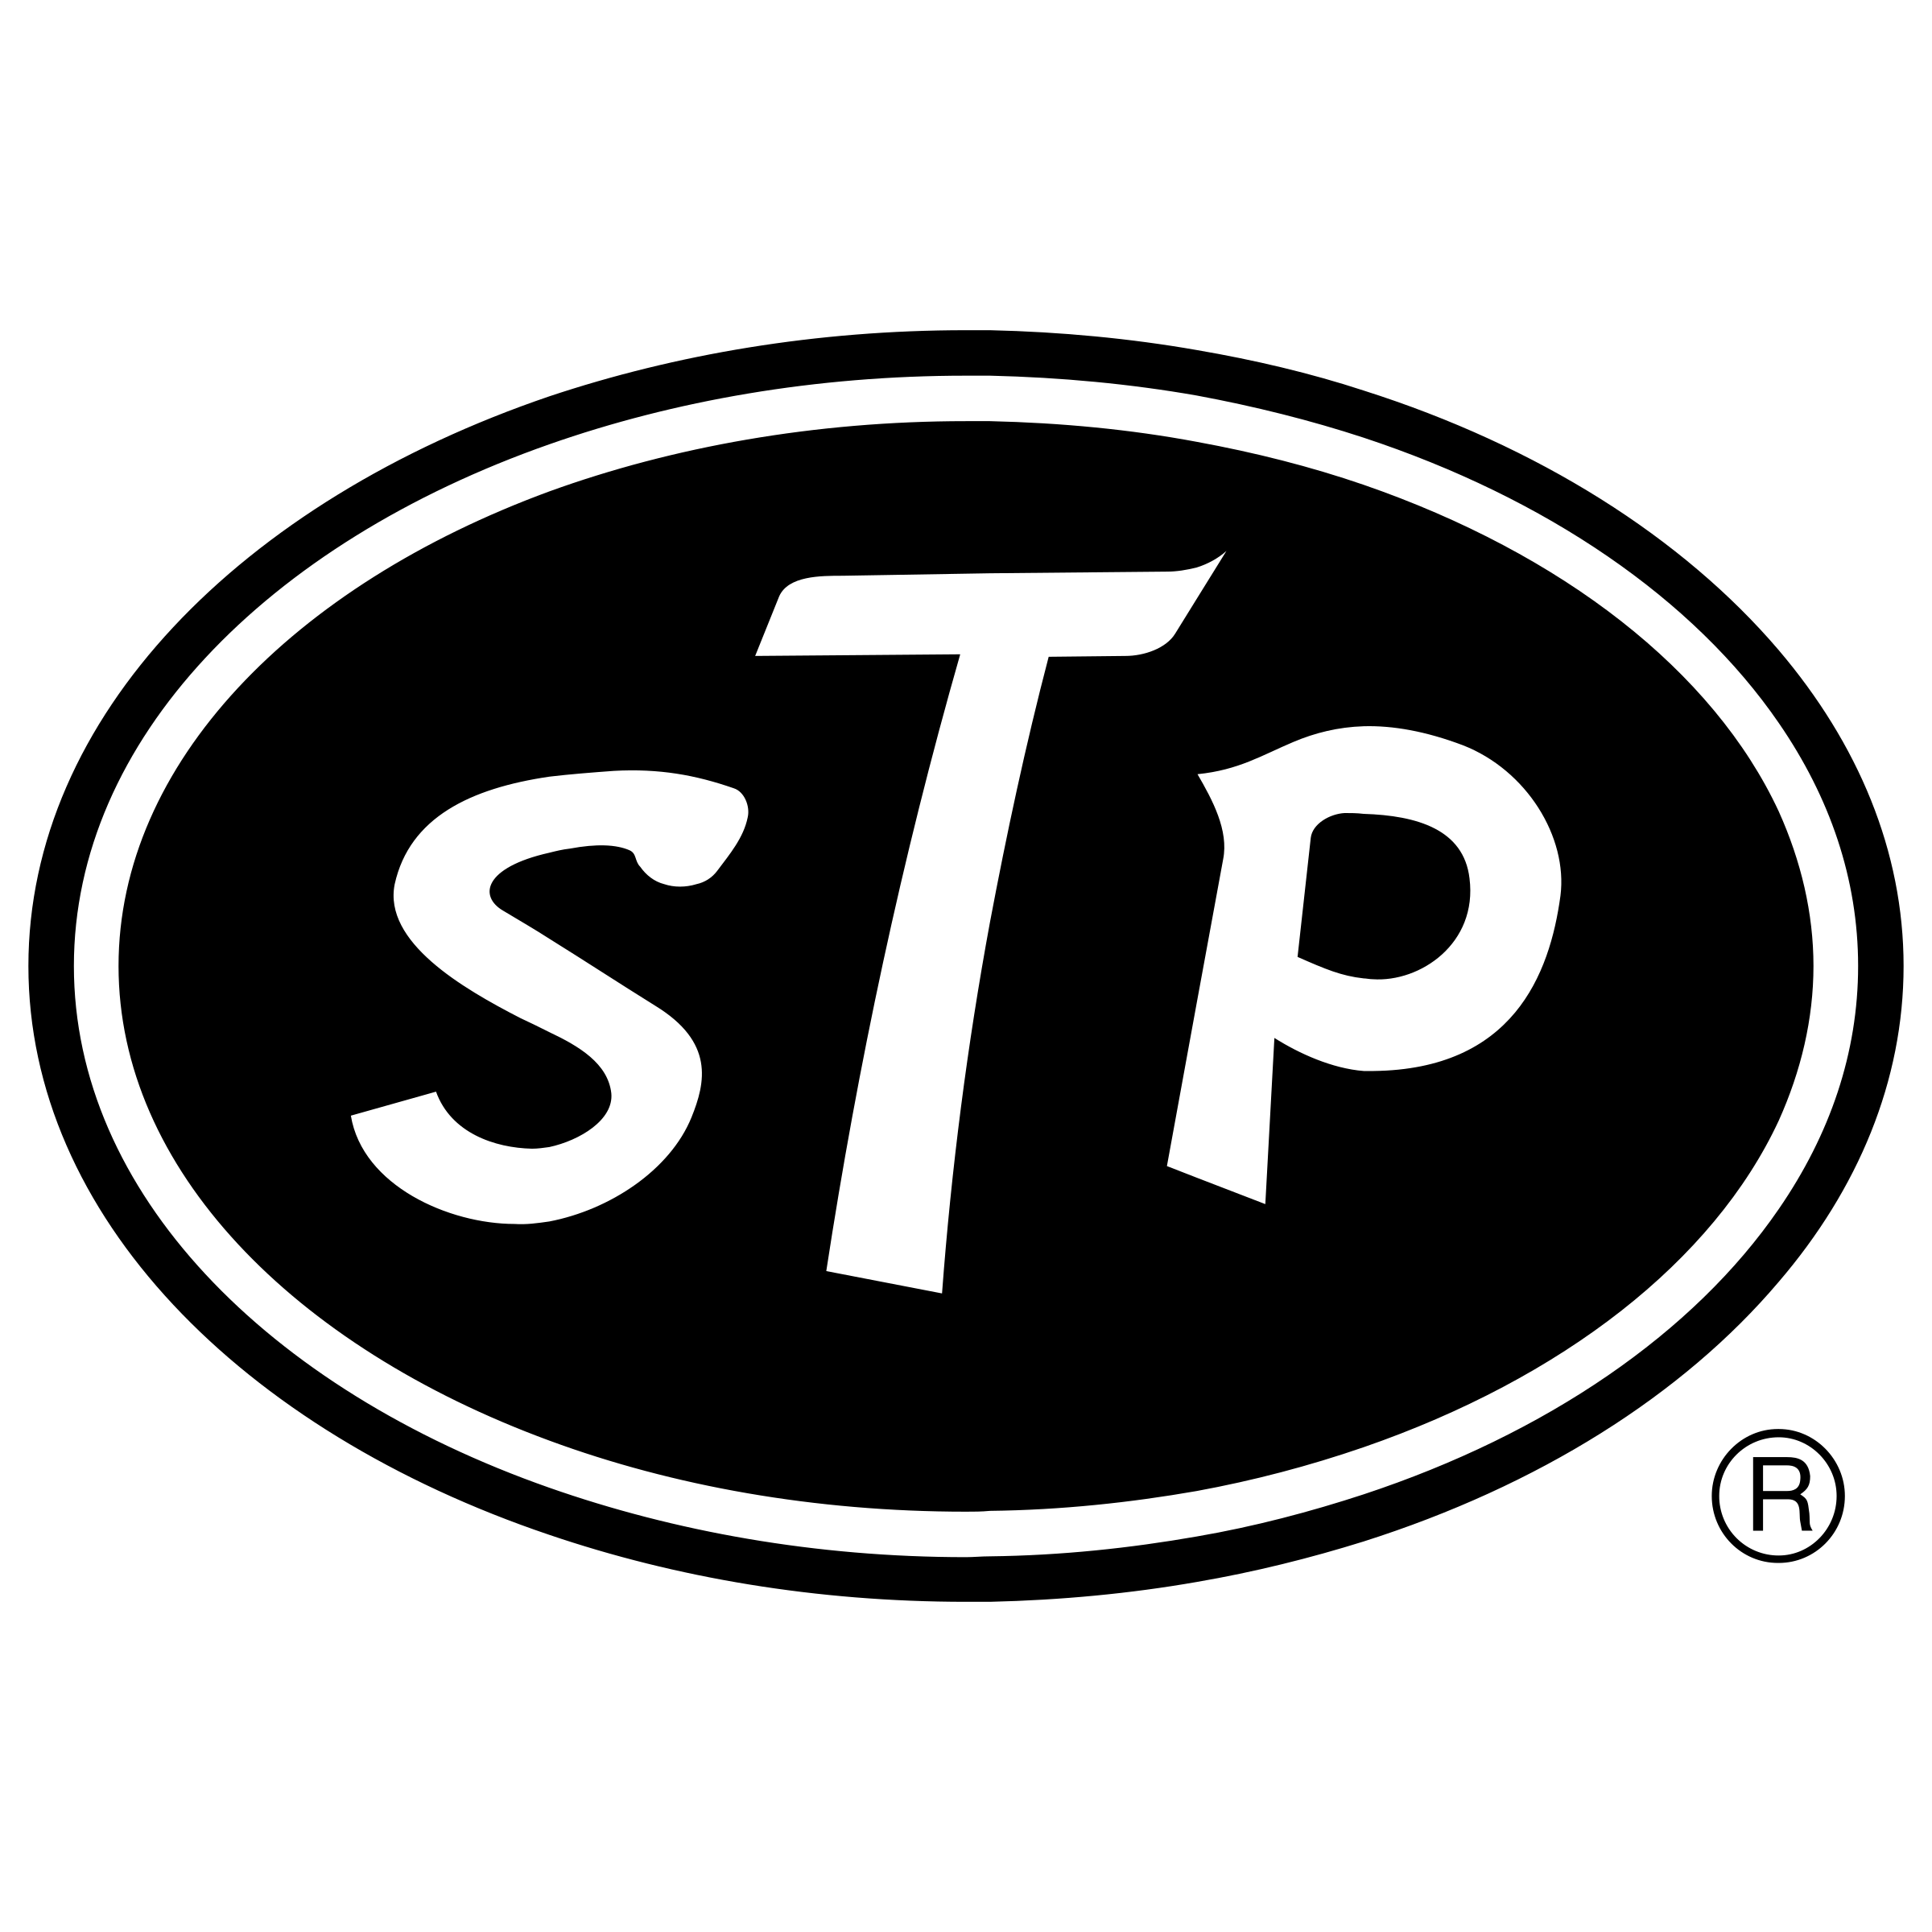 STP Logo - STP Logo PNG Transparent & SVG Vector - Freebie Supply